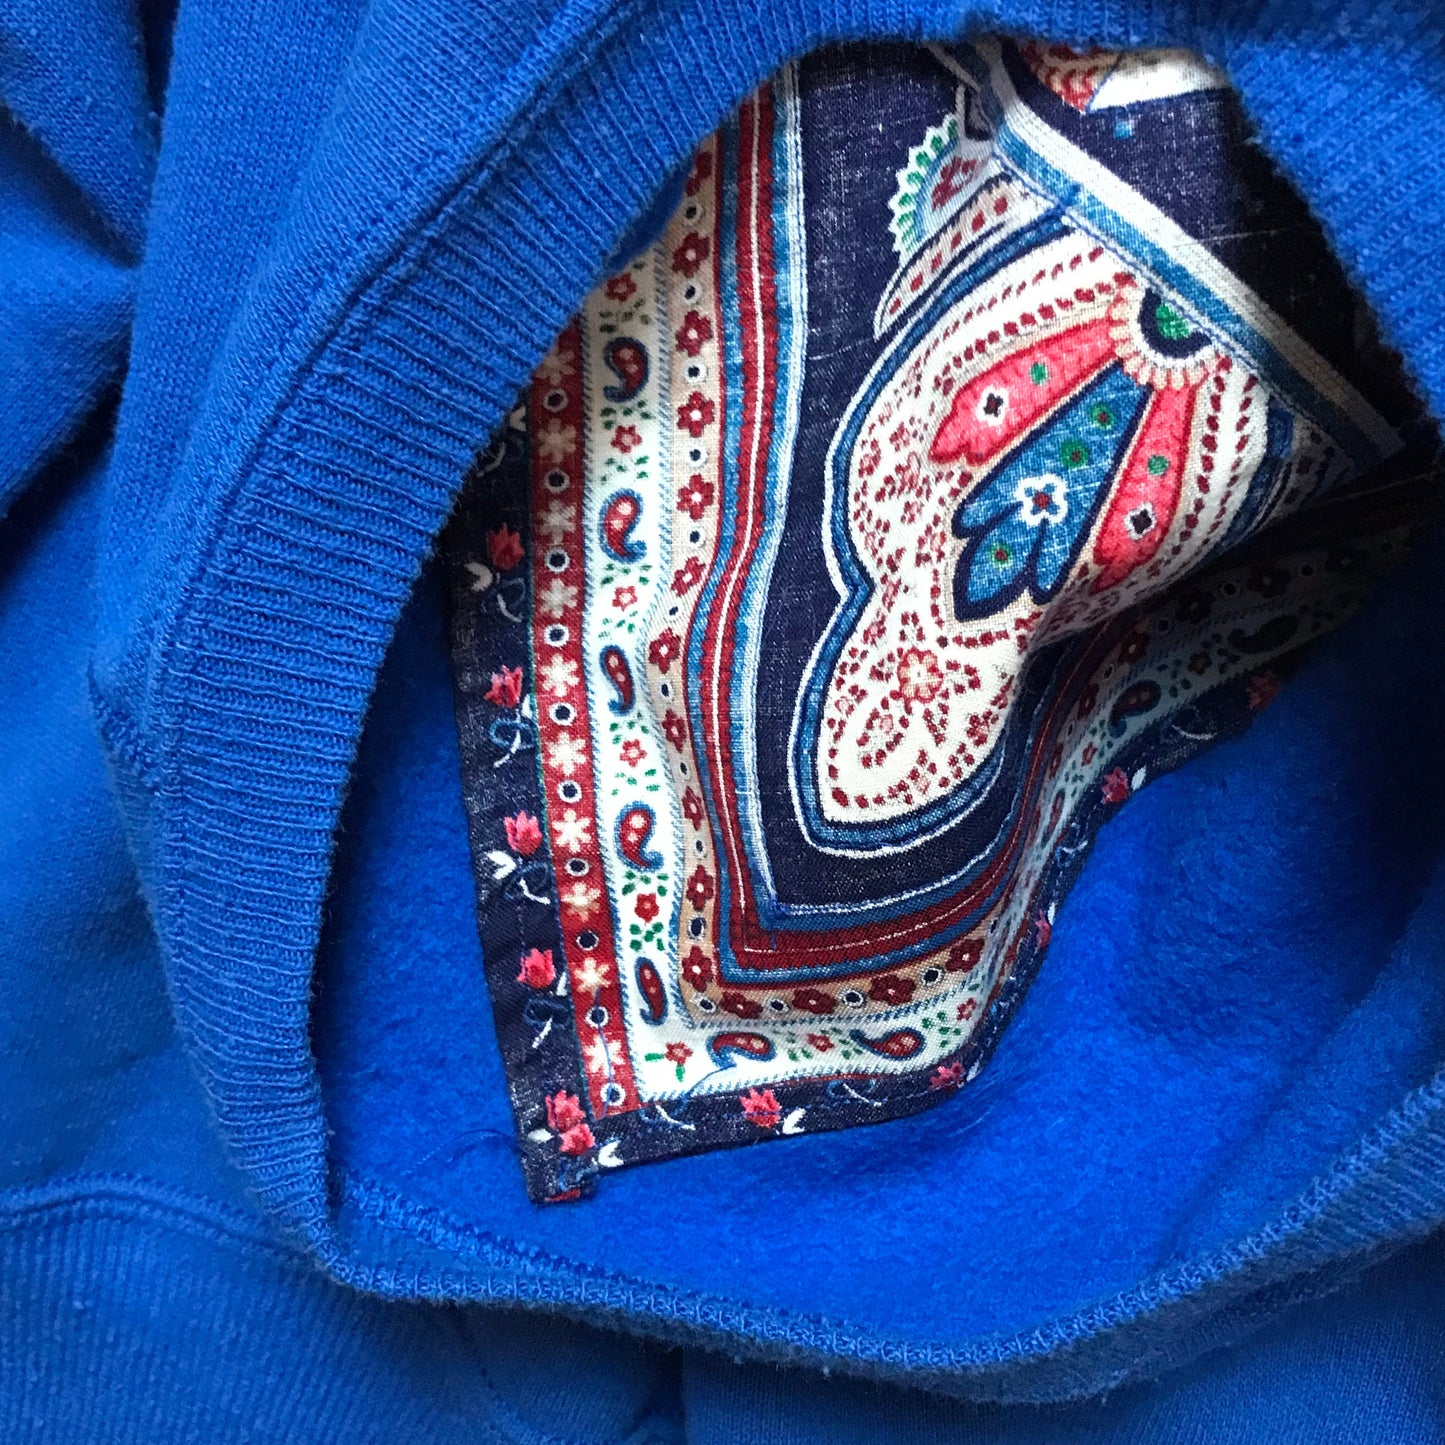 1990s Hanes Raglan Sweatshirt with Quilted Design Size M